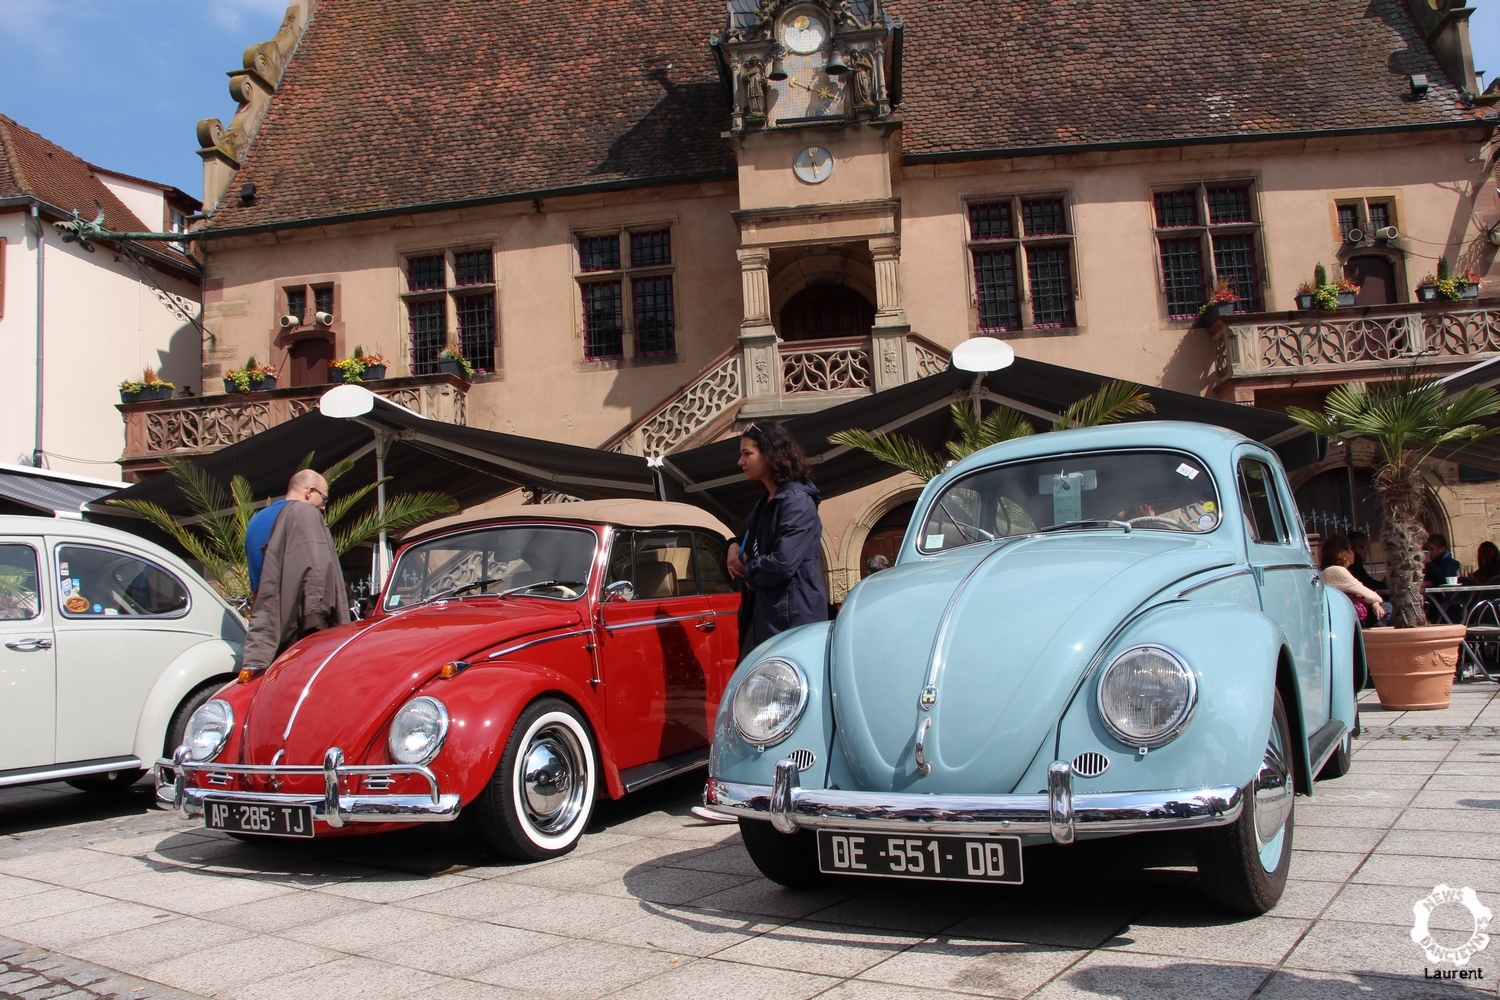 À Molsheim, le Cox Show s’invite au pays de Bugatti